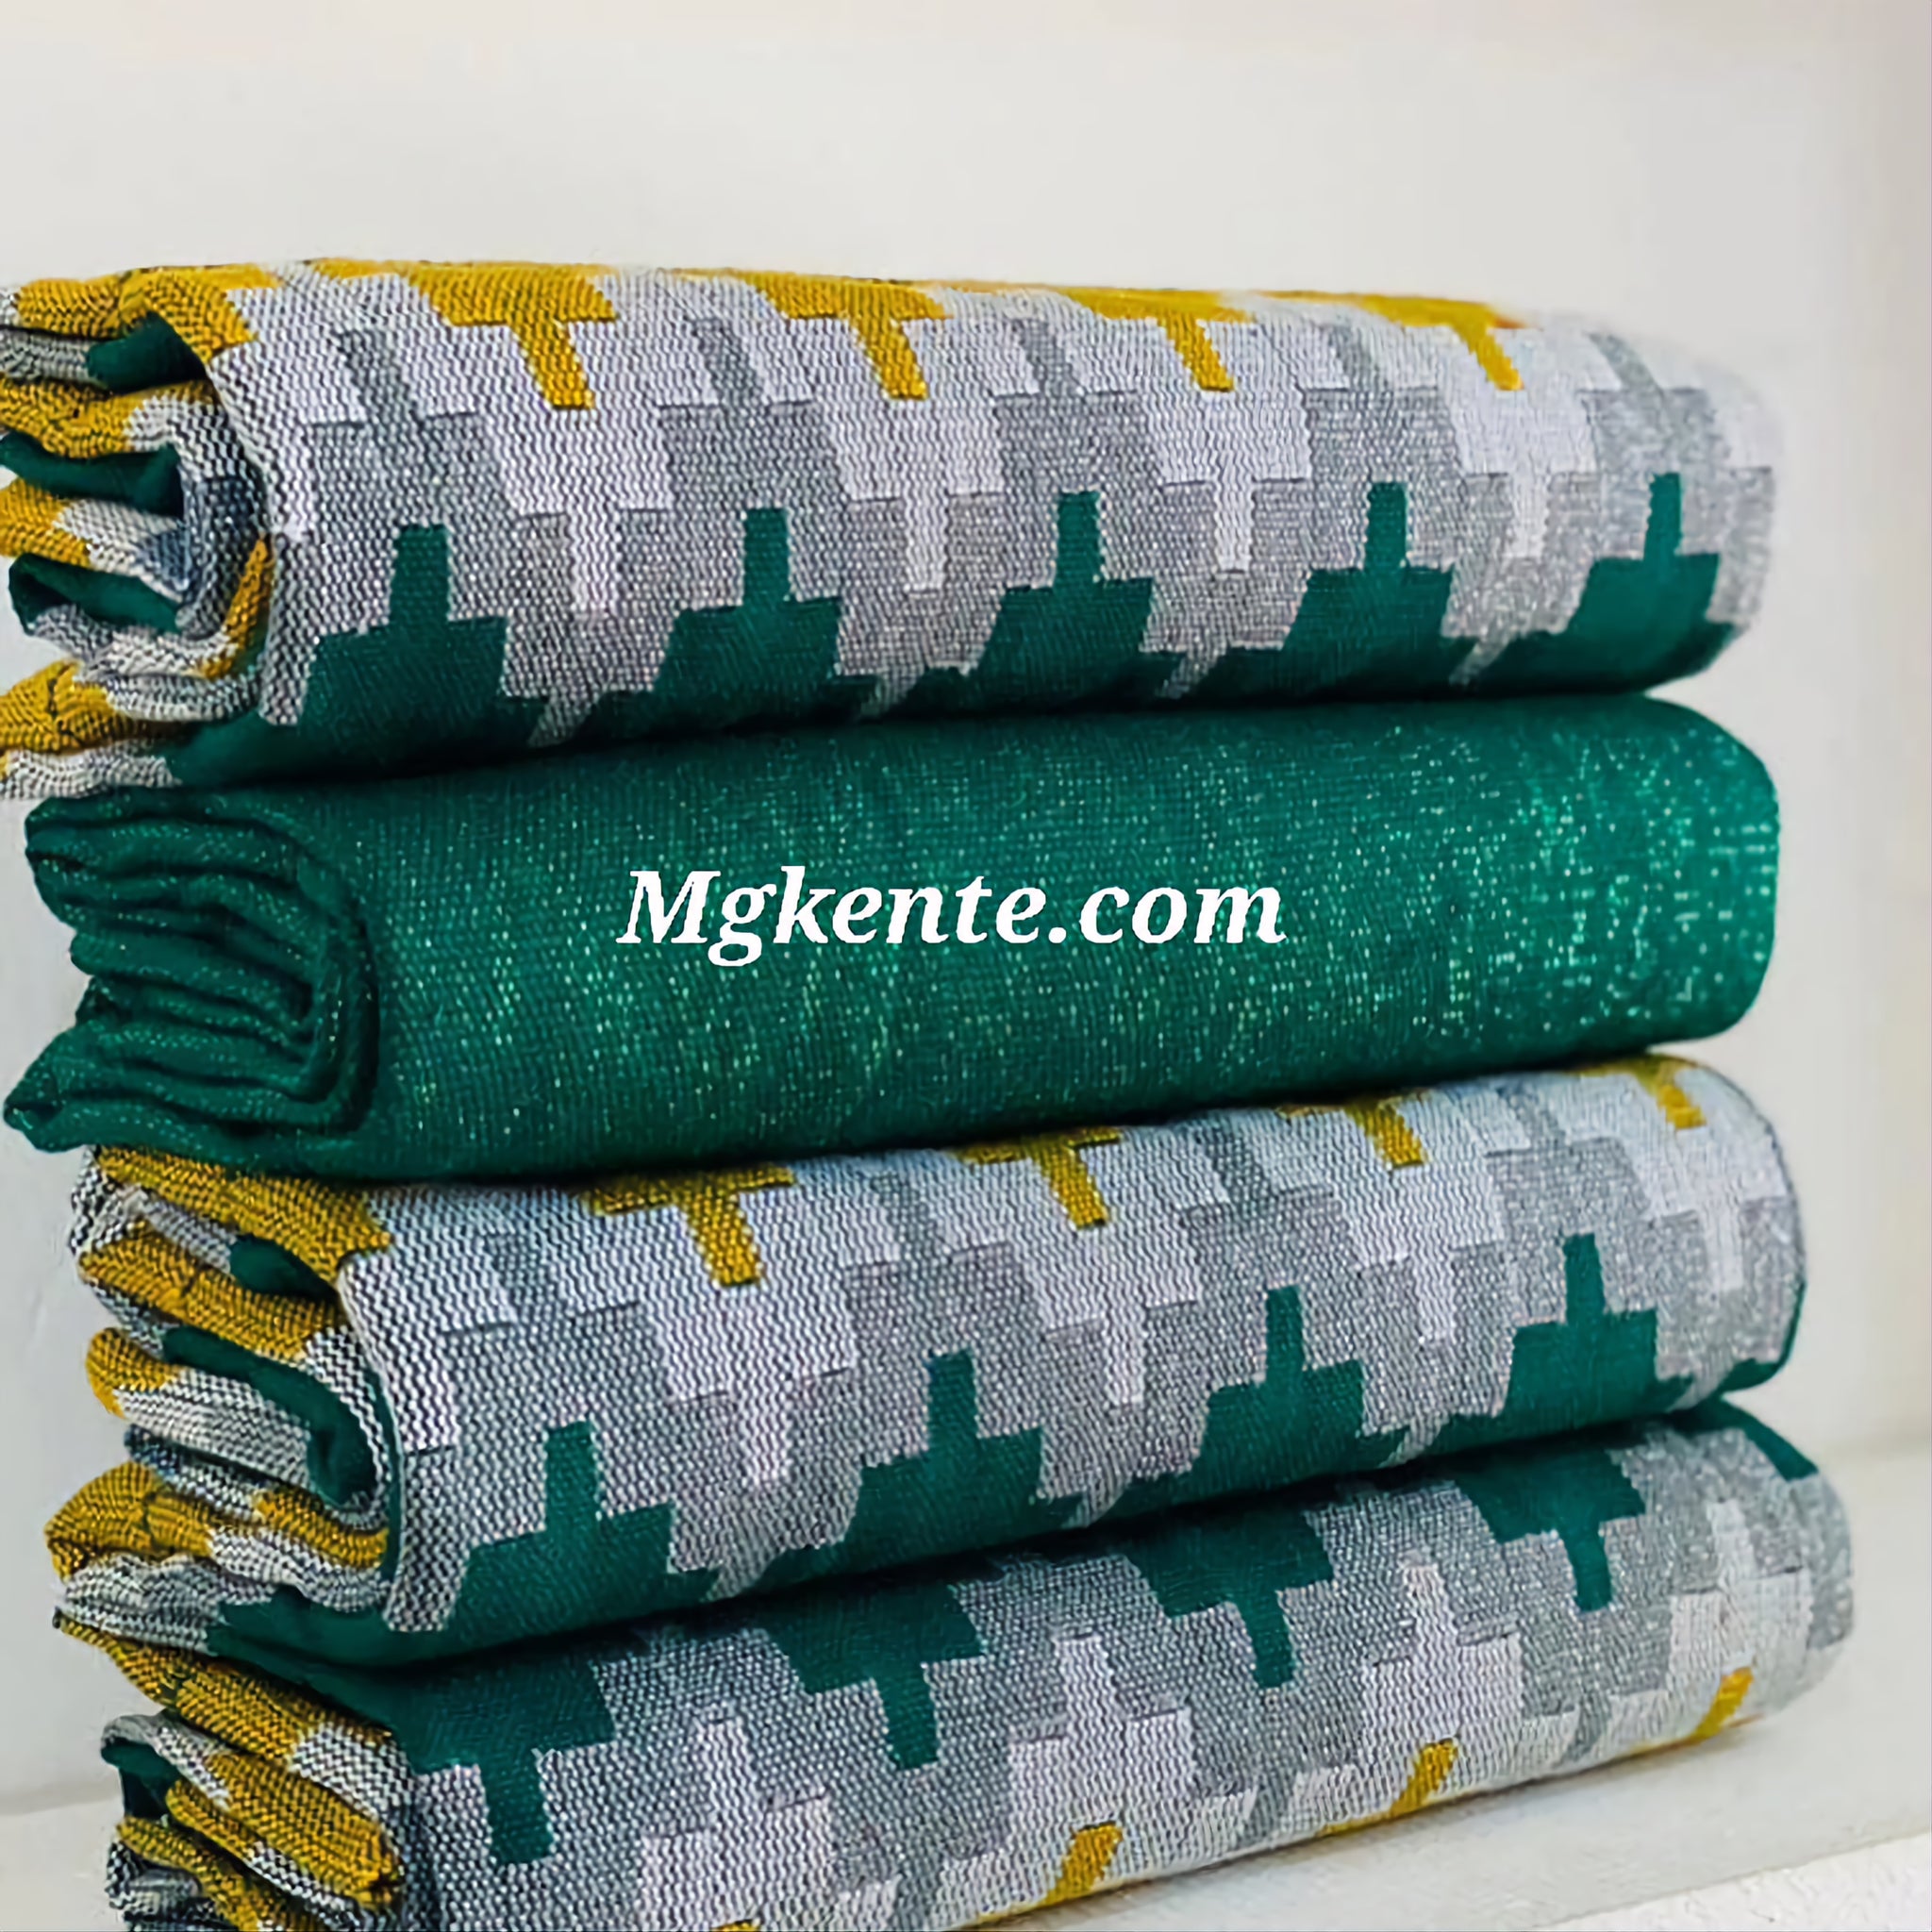 MG Premium Hand Weaved Kente Cloth P260